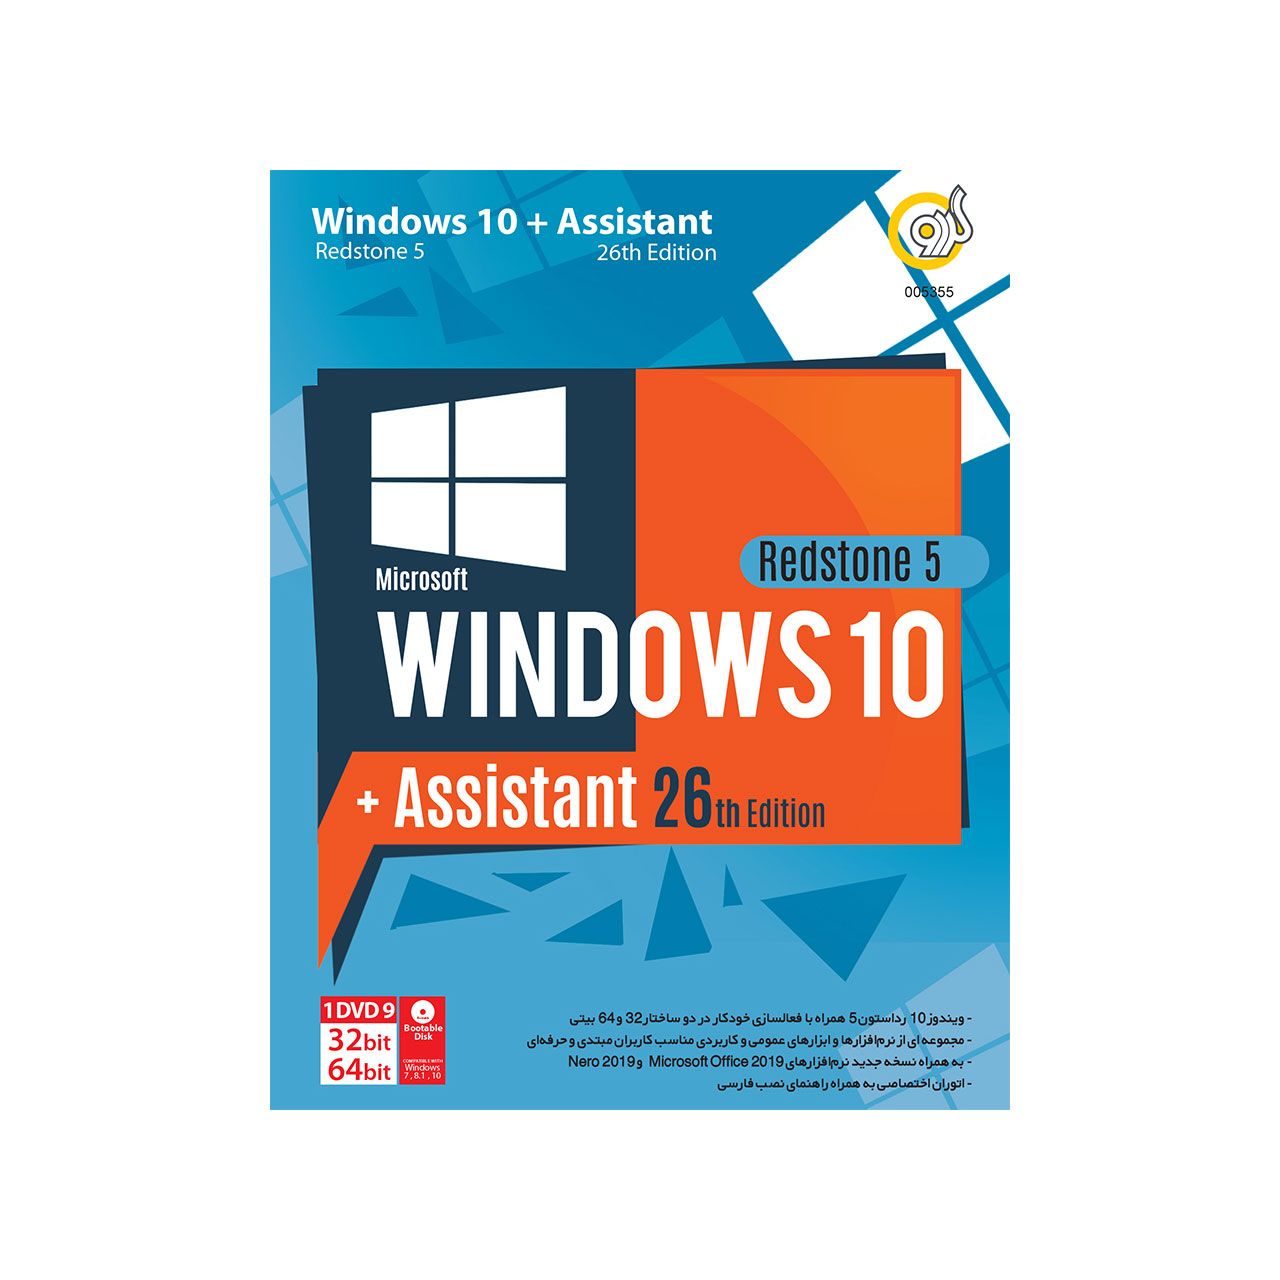 سیستم عامل ویندوز گردو Windows 10 RS5 + Assistant 26th Edition